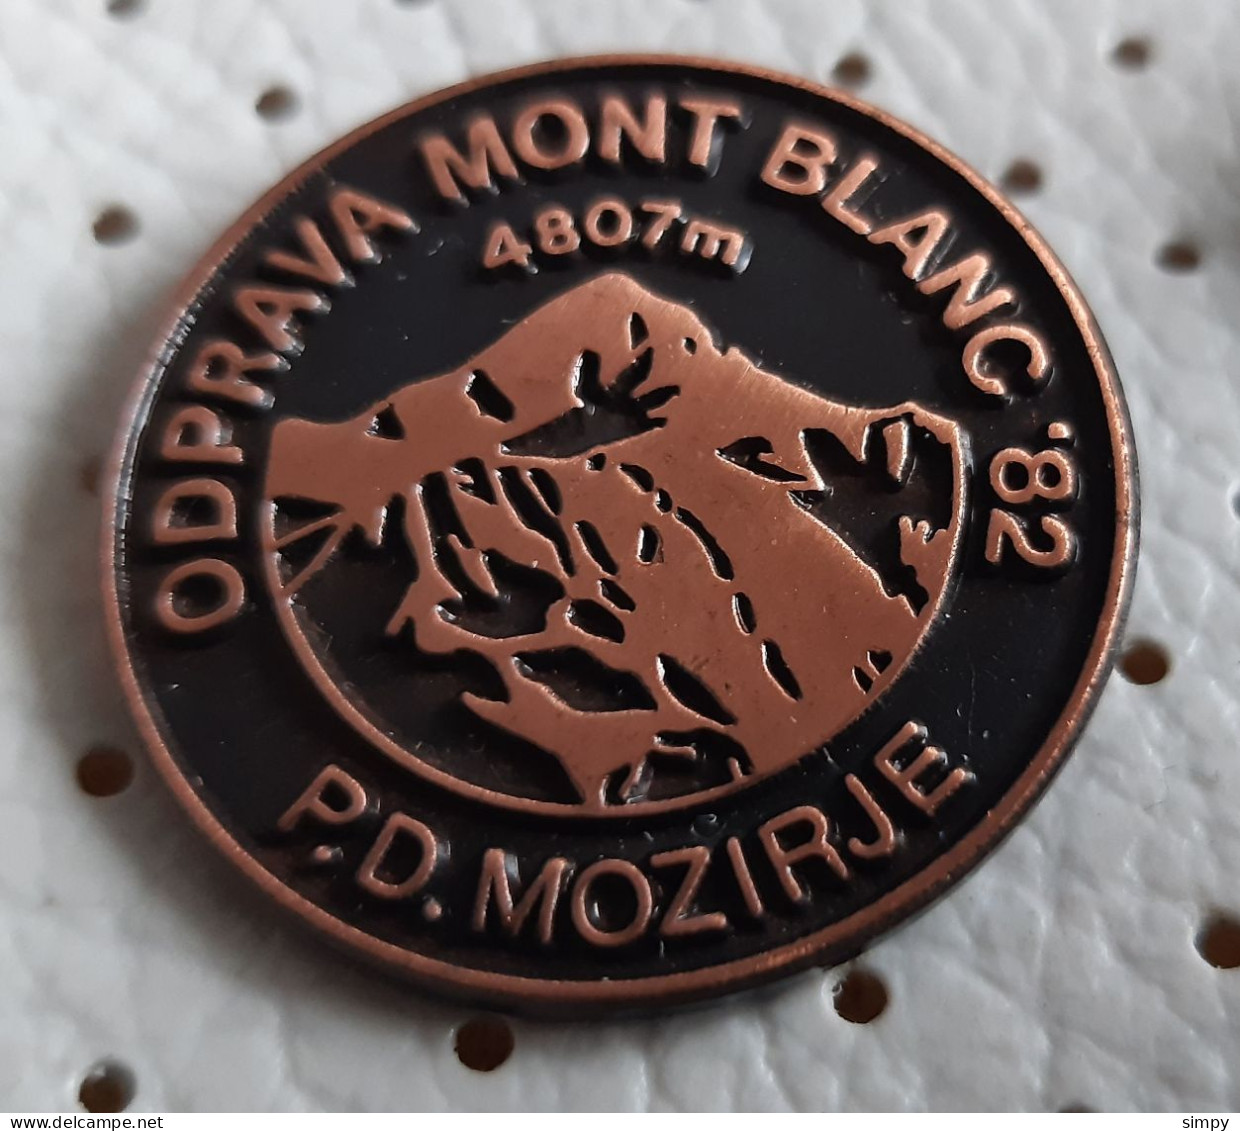 Yugoslav Expedition MONT BLANC 4807m  1982 PD Mozirje Slovenia Alpinism Mountaineering Pin - Alpinisme